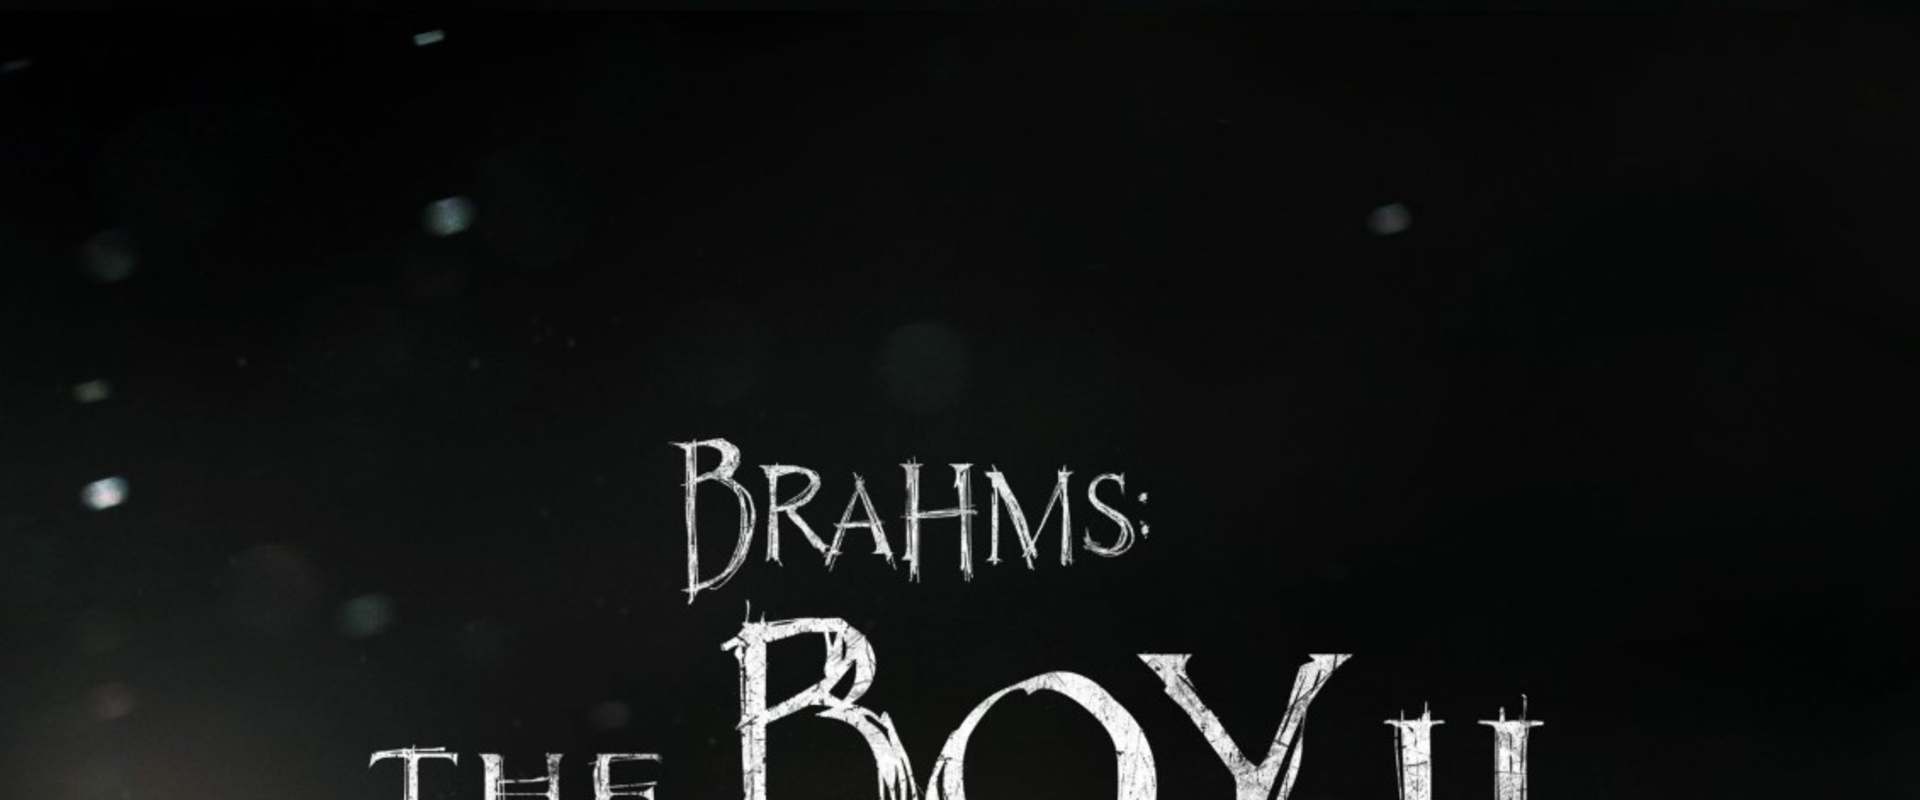 Brahms: The Boy II background 2